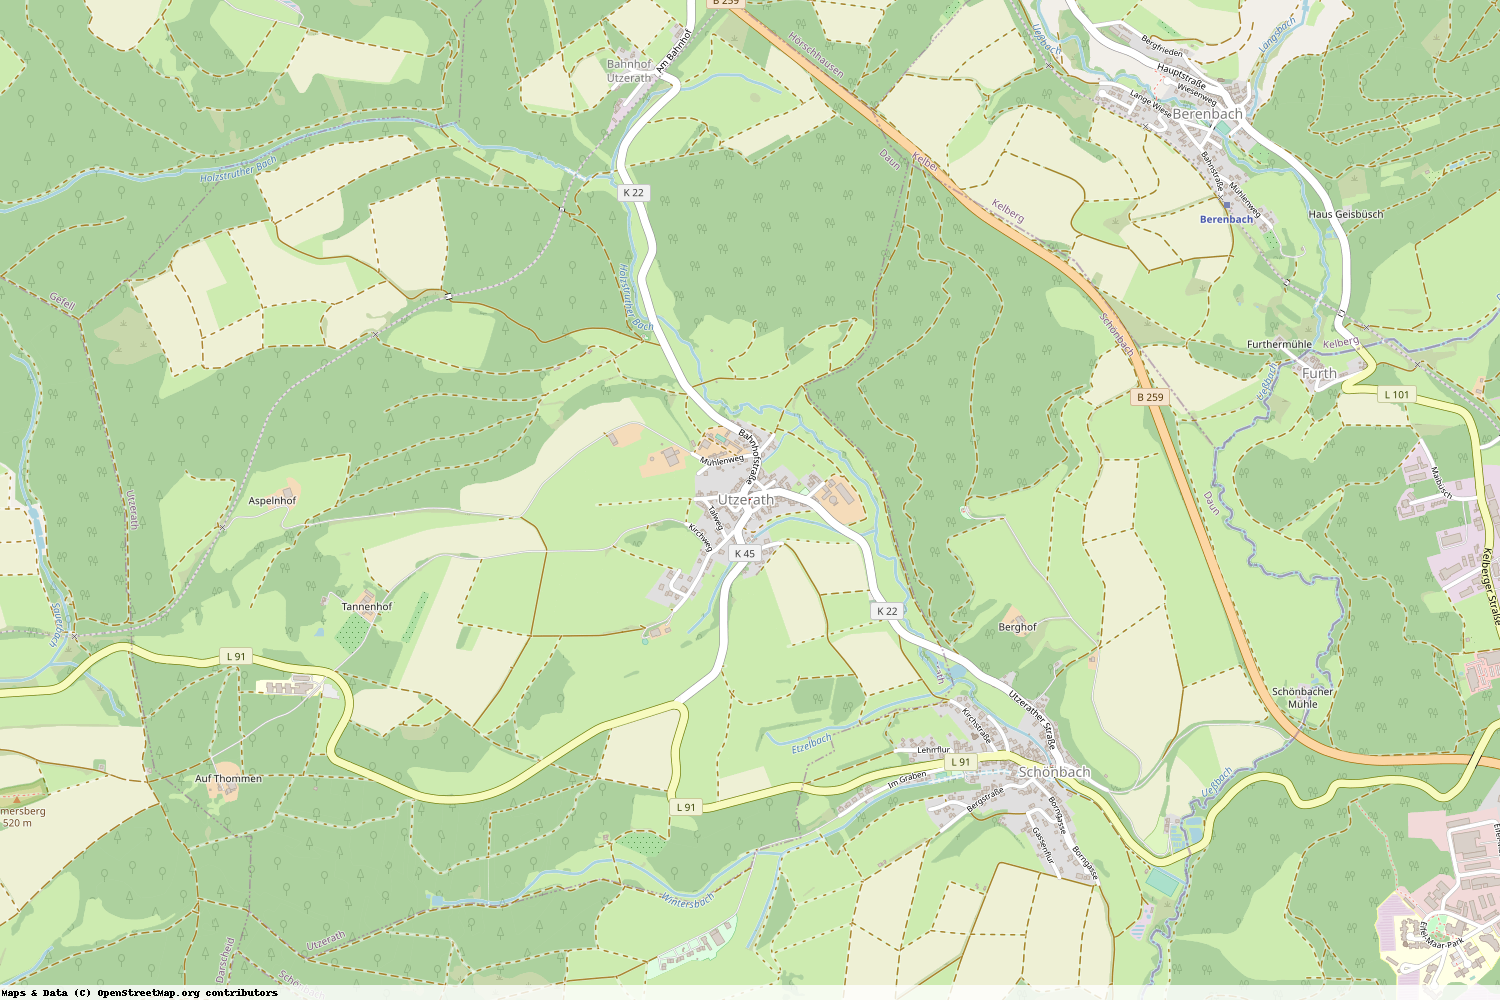 Ist gerade Stromausfall in Rheinland-Pfalz - Vulkaneifel - Utzerath?